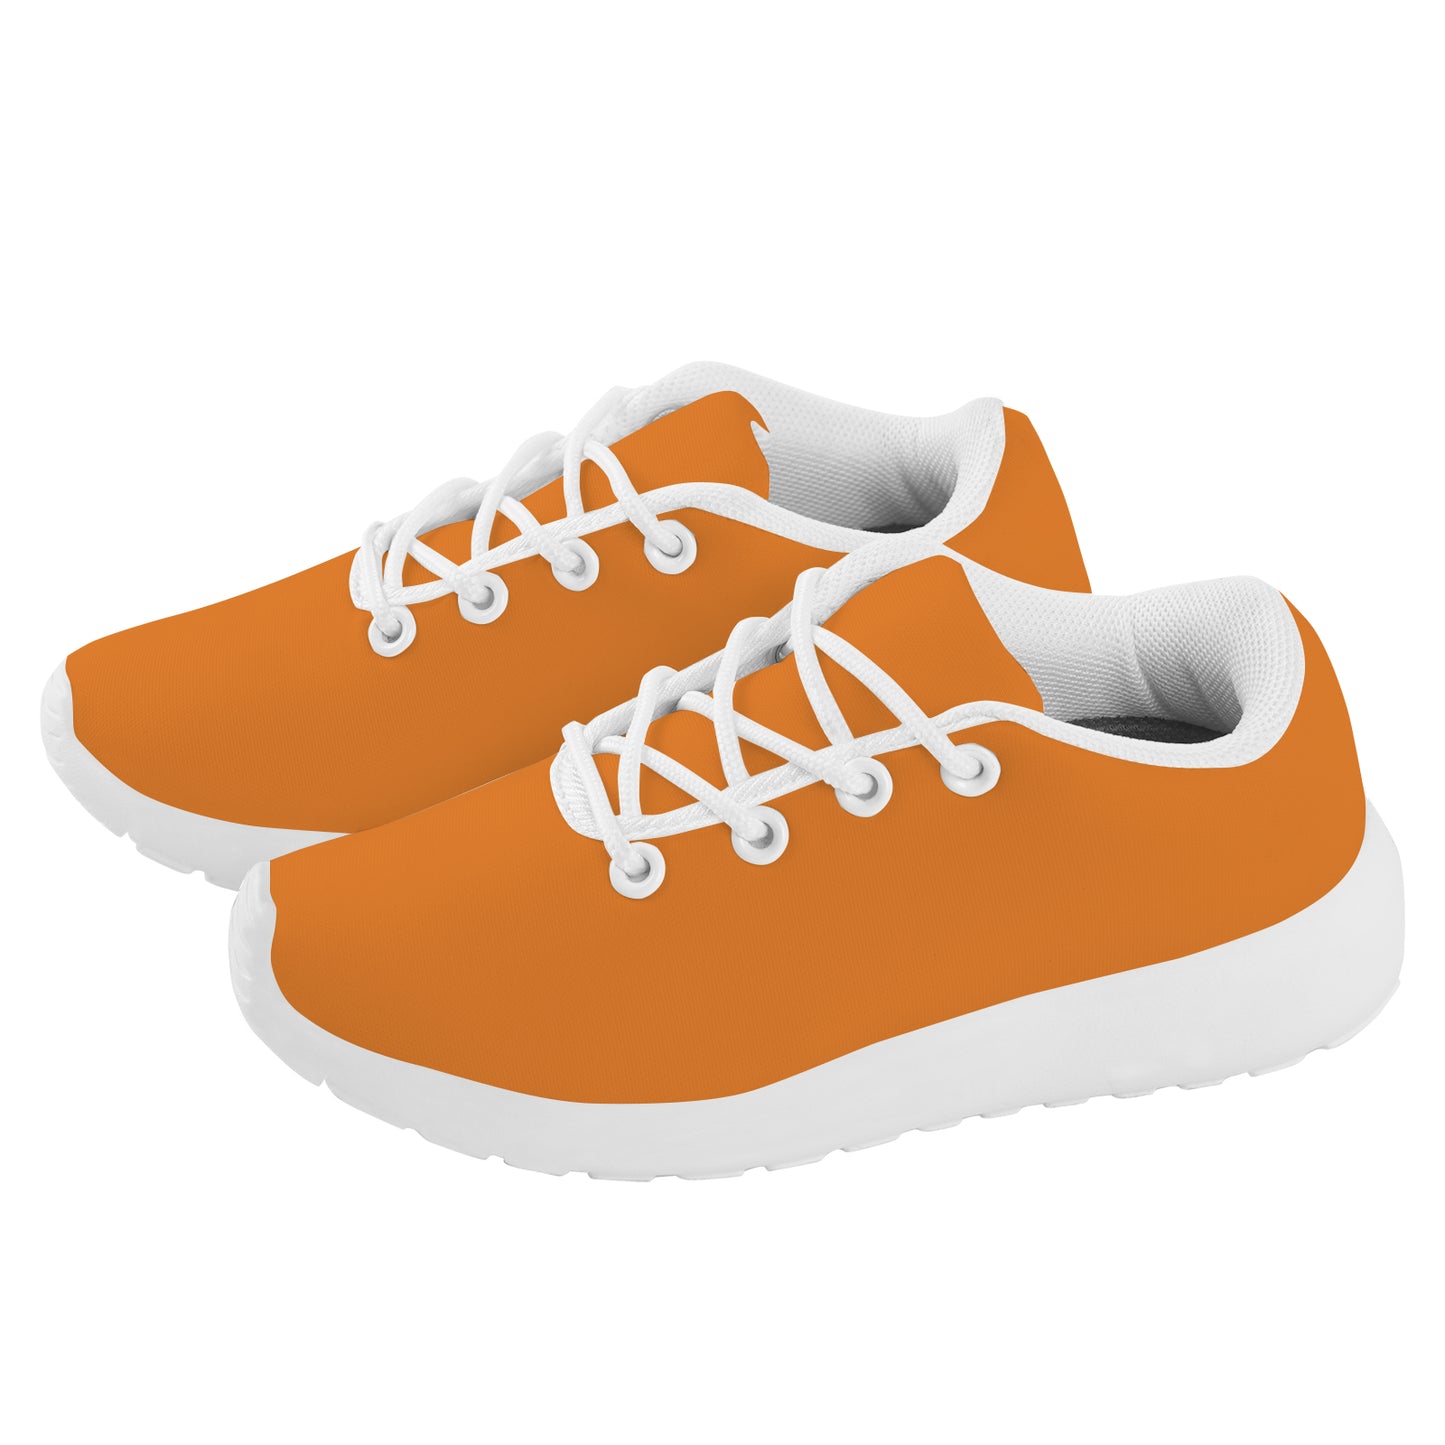 Kid's Sneakers - Classic Orange